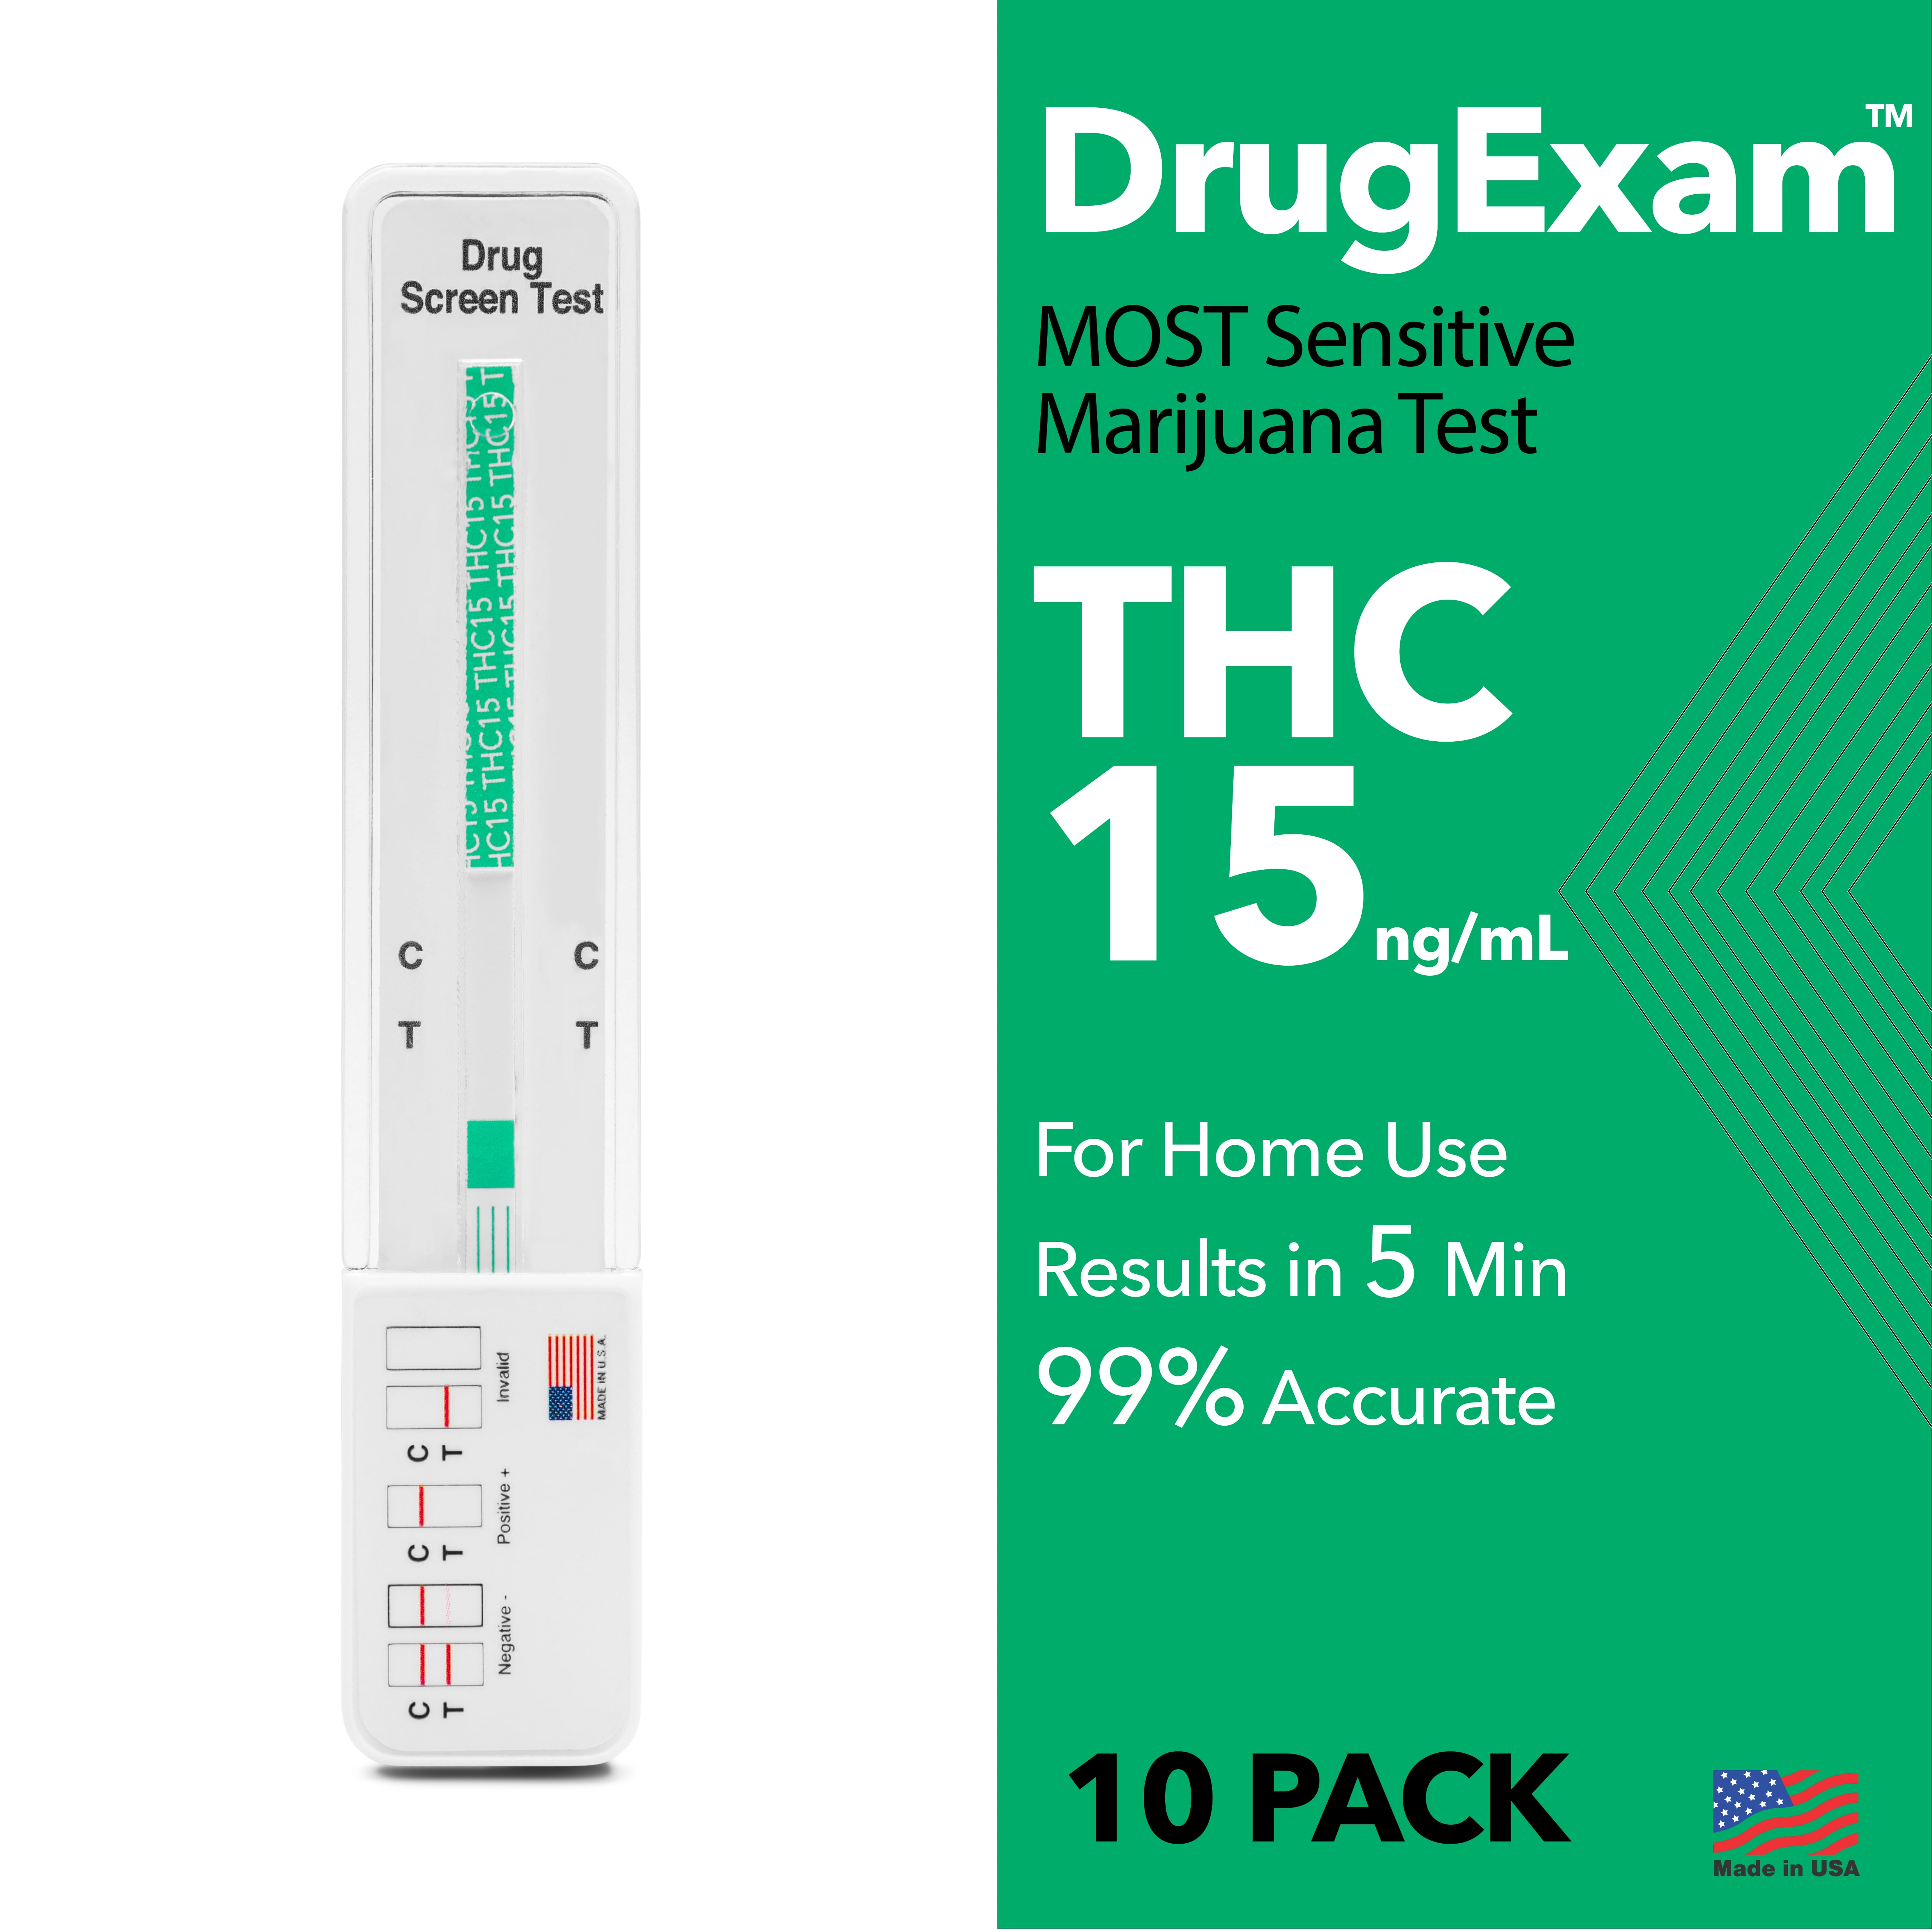 10 Pack - DrugExam Made in USA Most Sensitive Marijuana THC 15 ng